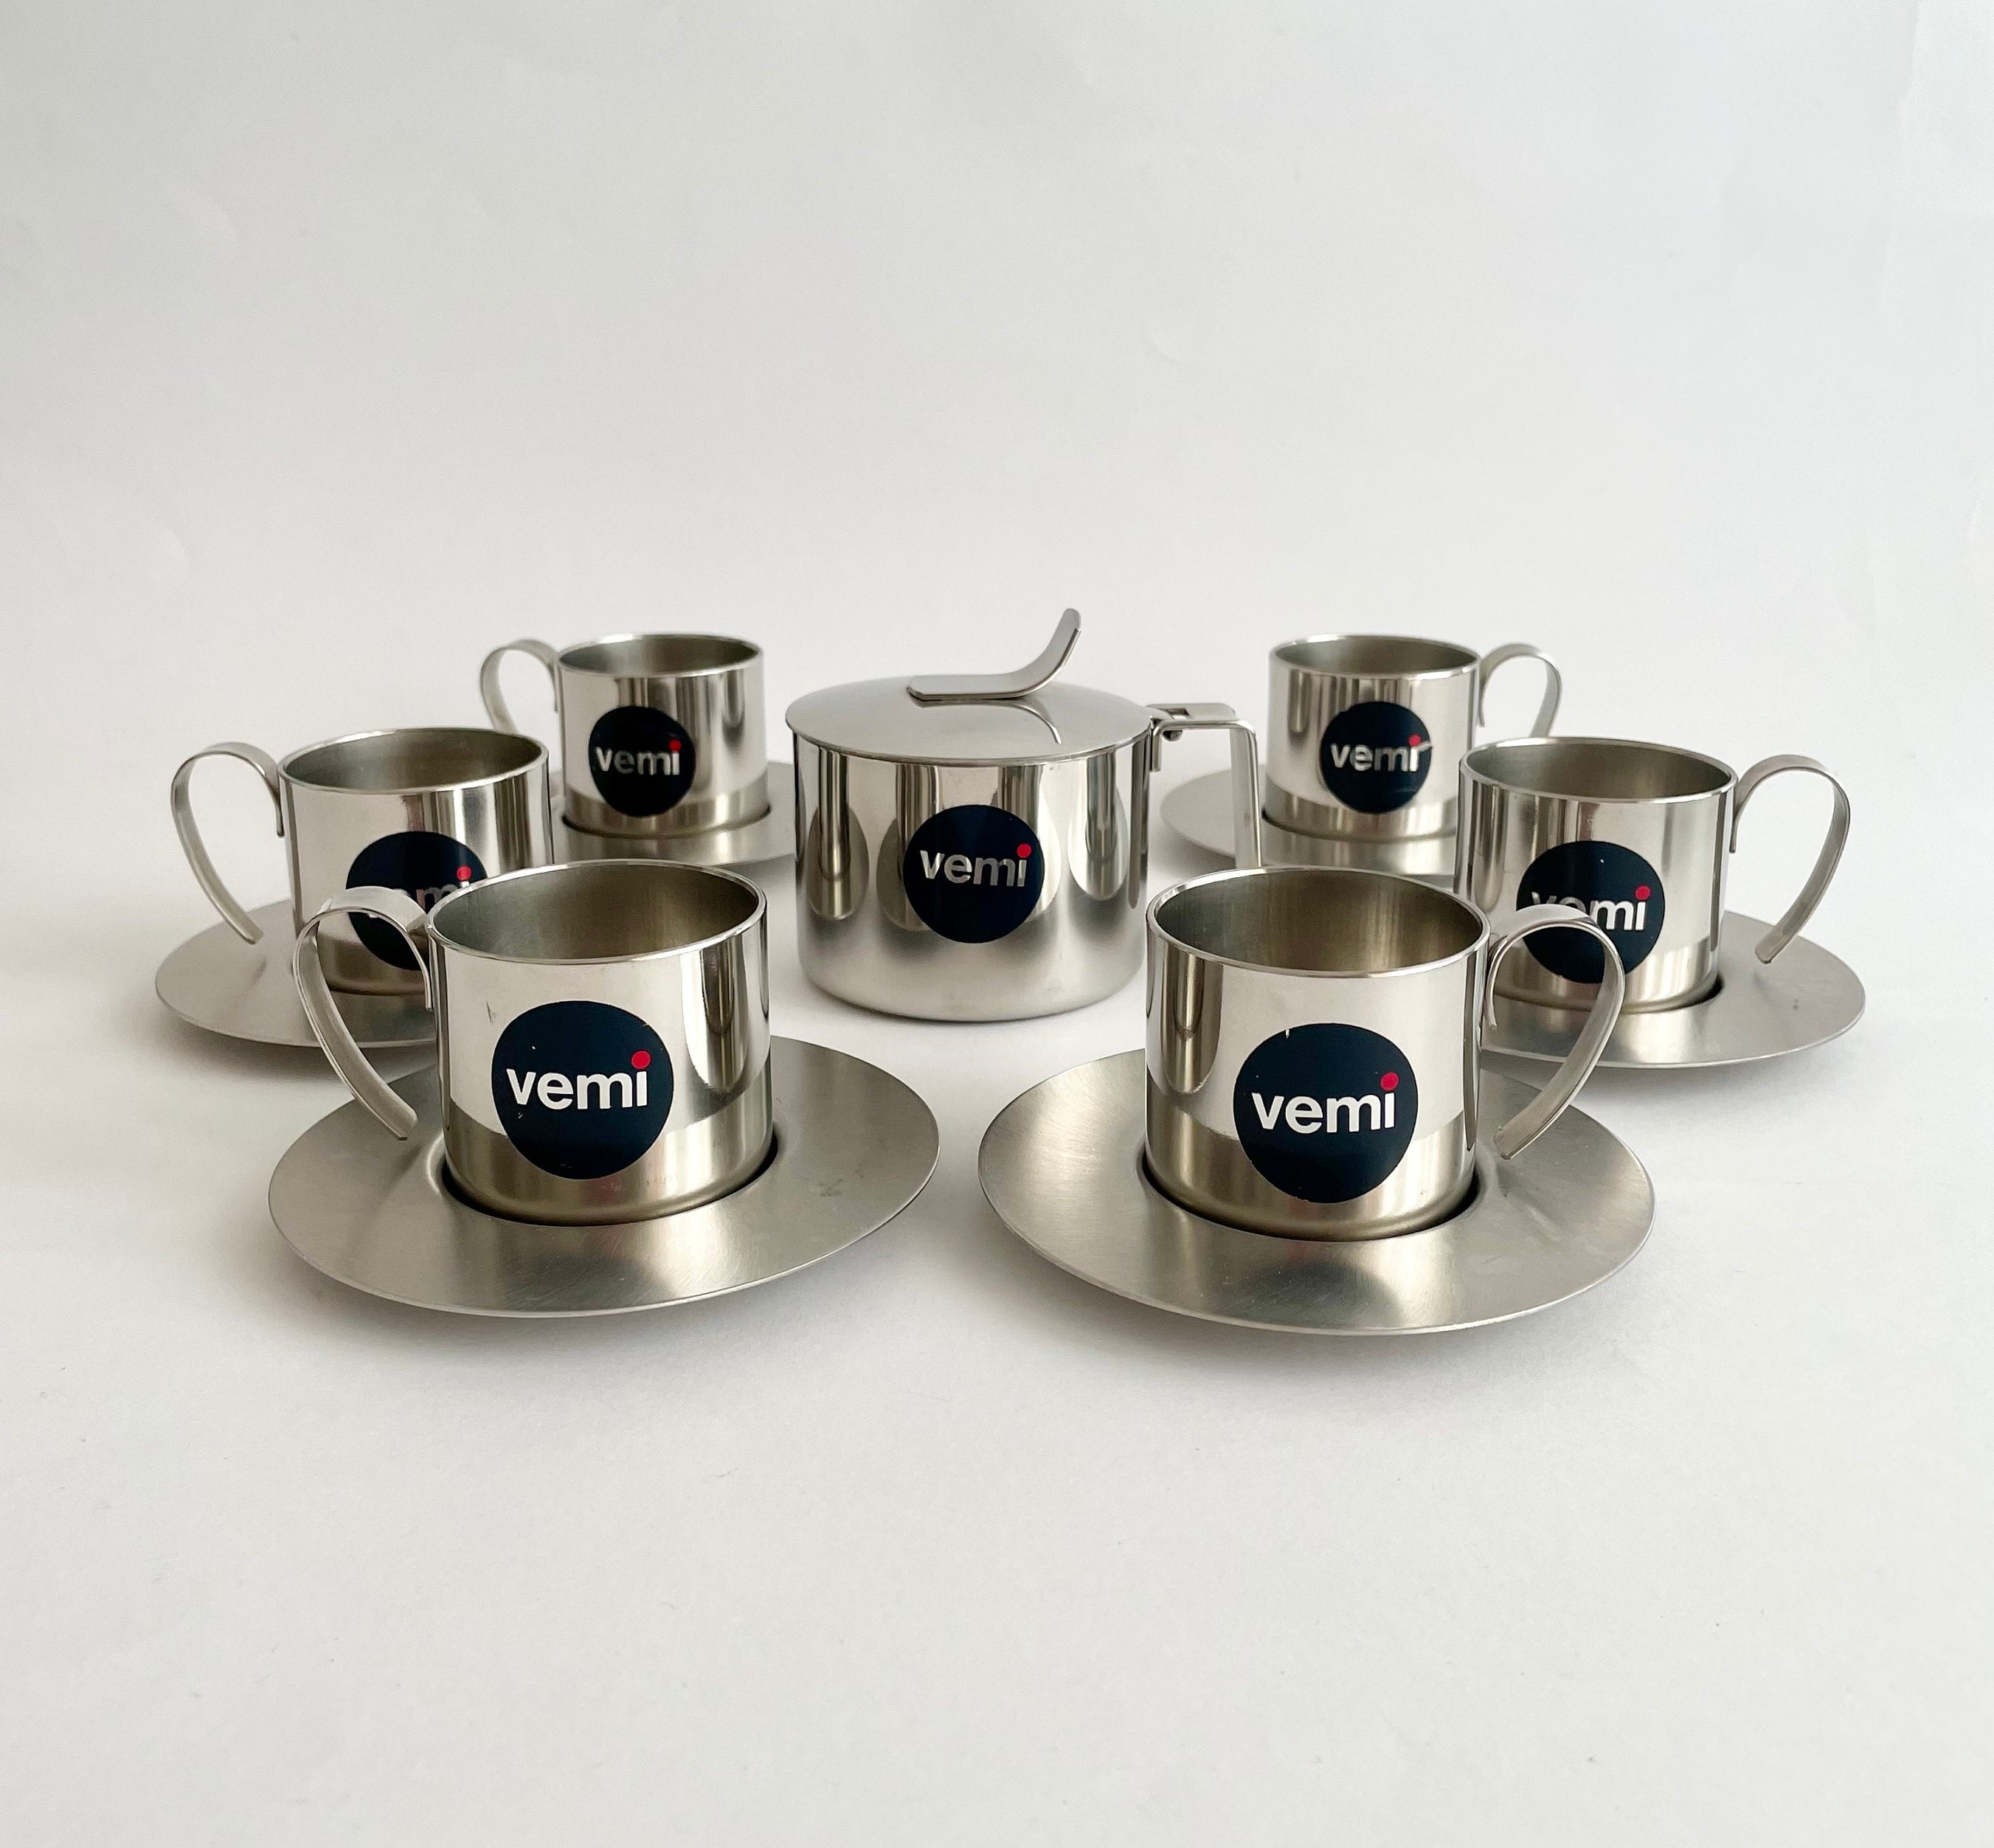 ITALIAN STAINLESS STEEL & GLASS MODERN DESIGNER COFFEE GLASS CUP MUG